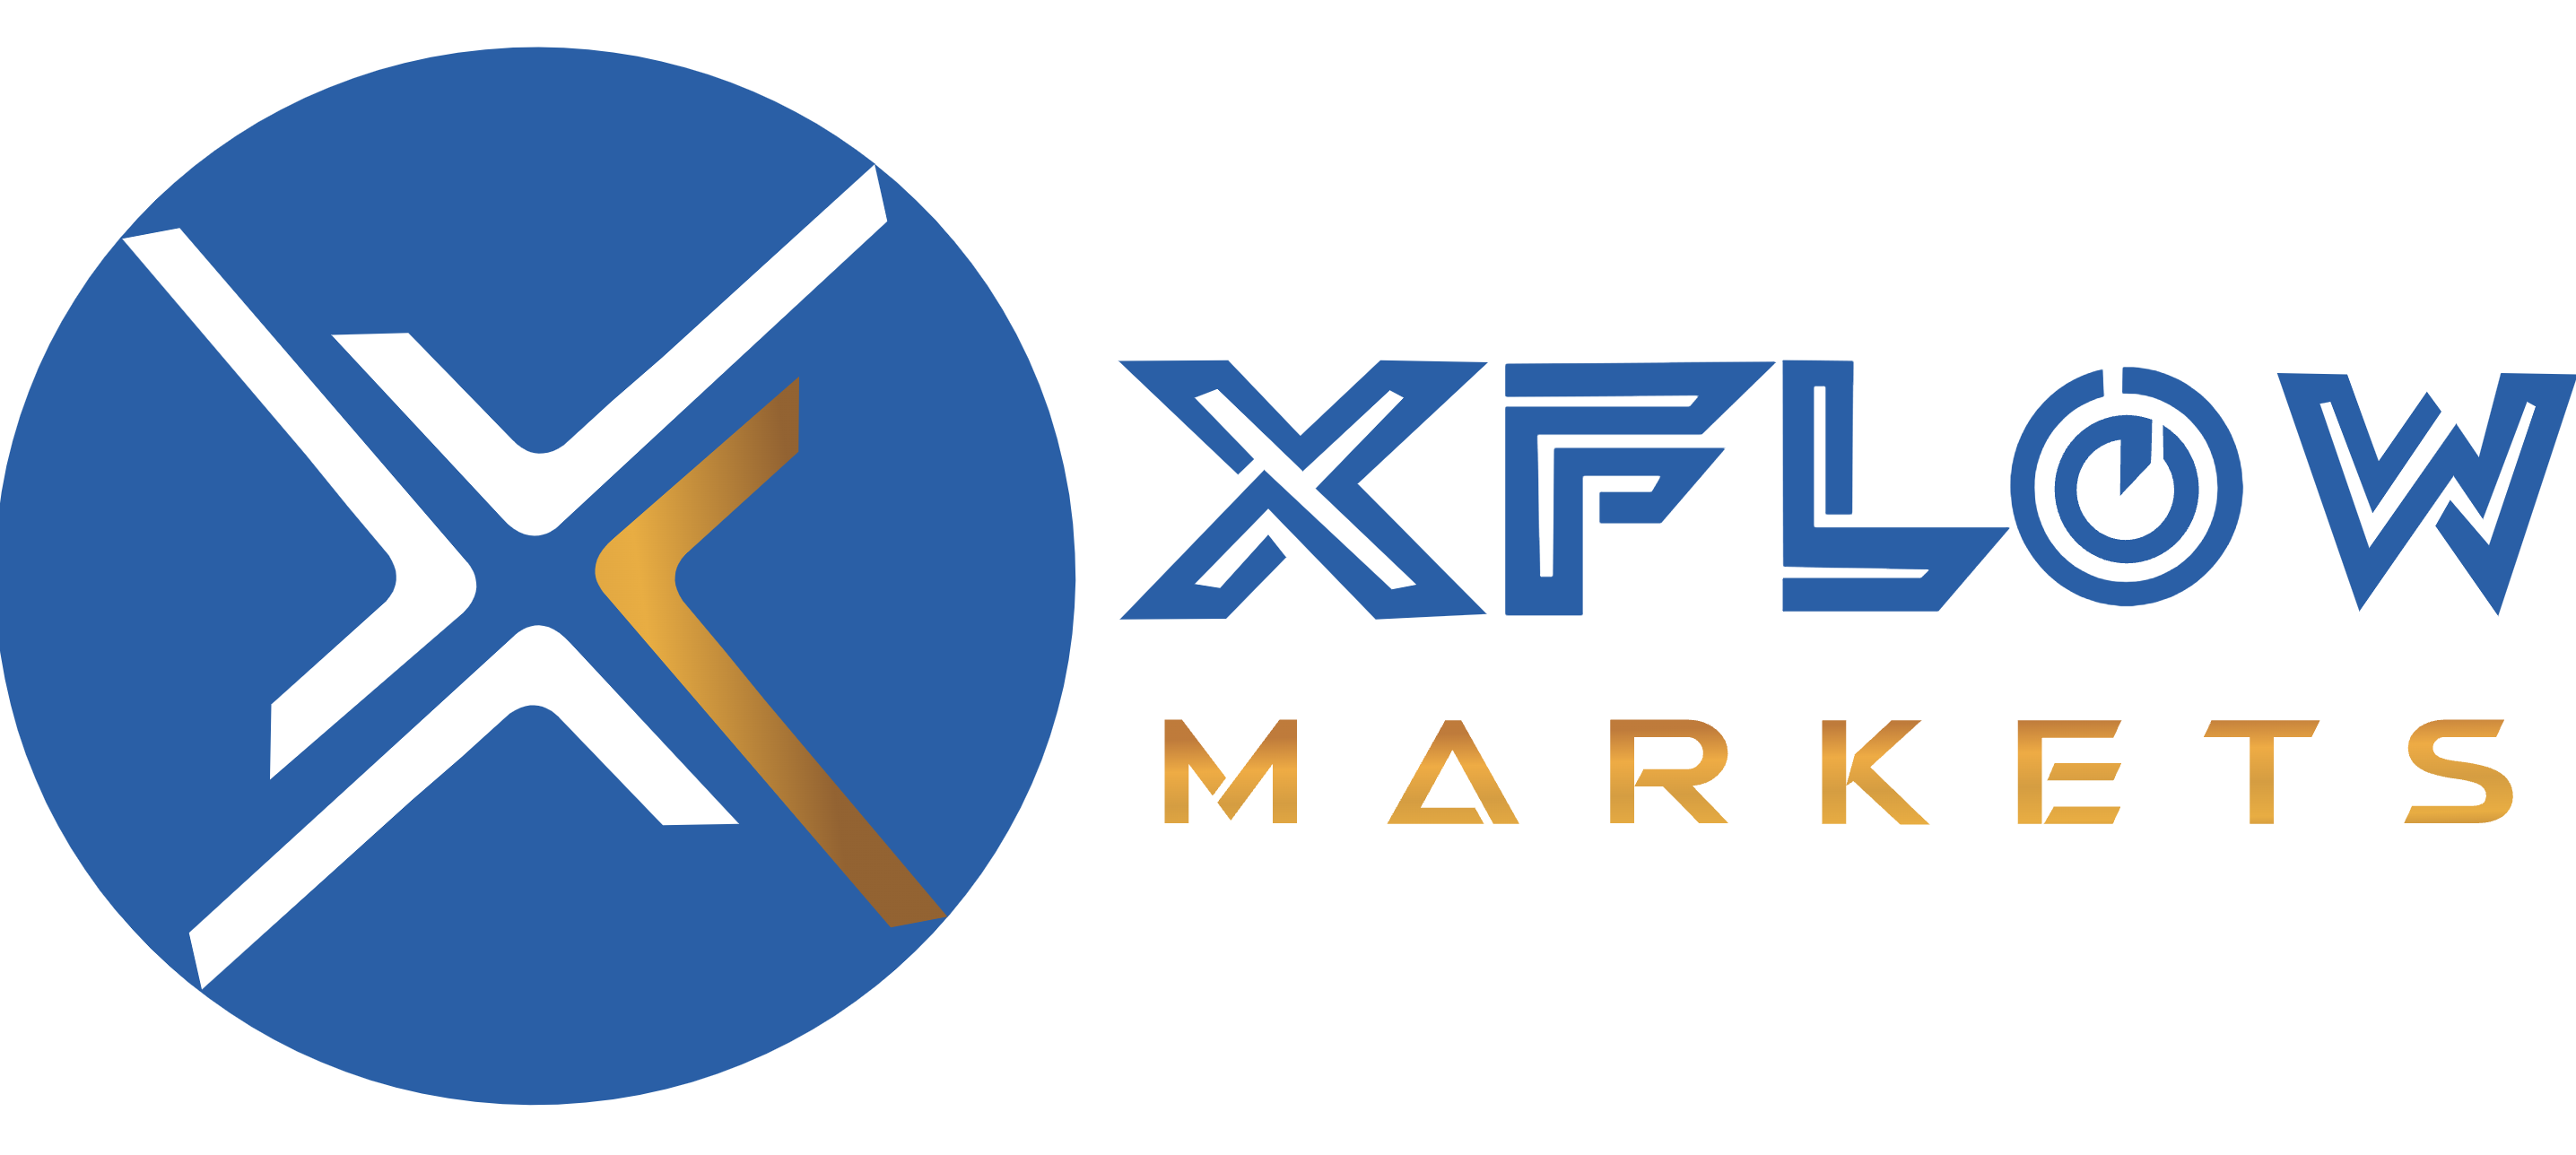 Xflow Markets